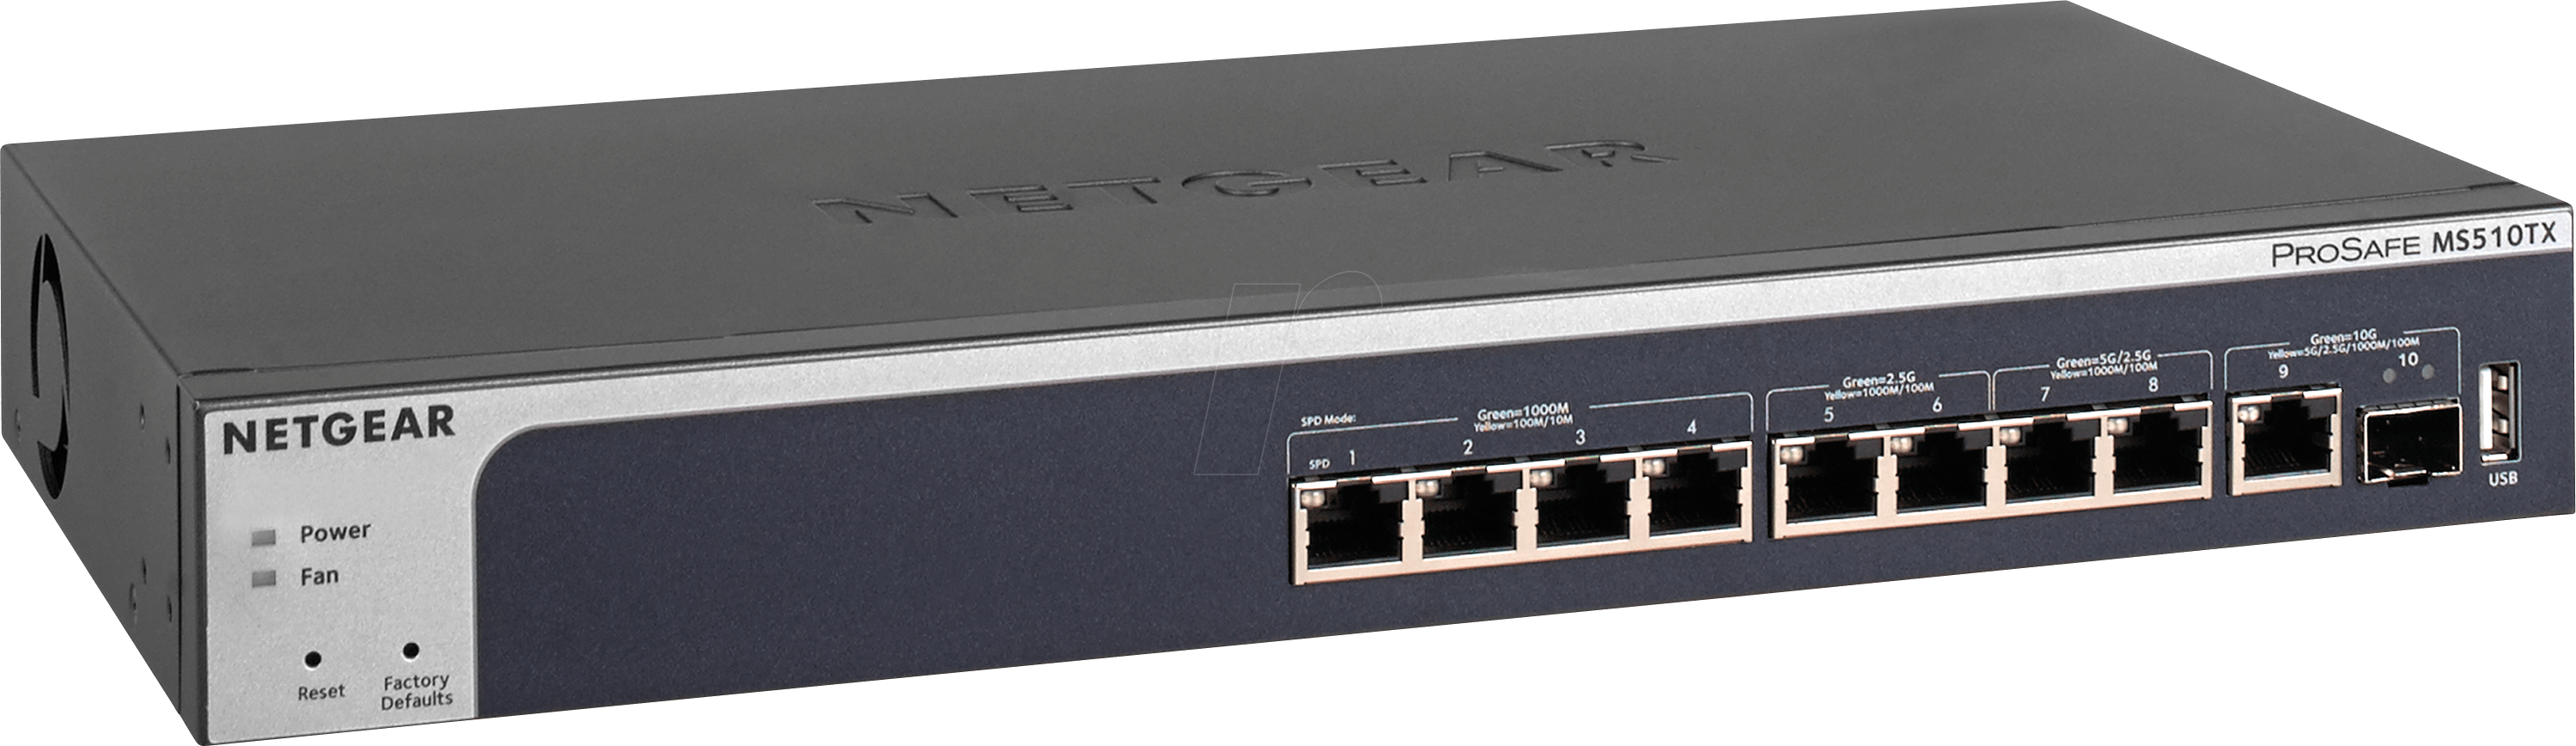 NETGEAR 8-Port Multi-Gigabit Smart Managed Pro Switch with 10G Copper/Fiber Uplinks, MS510TX